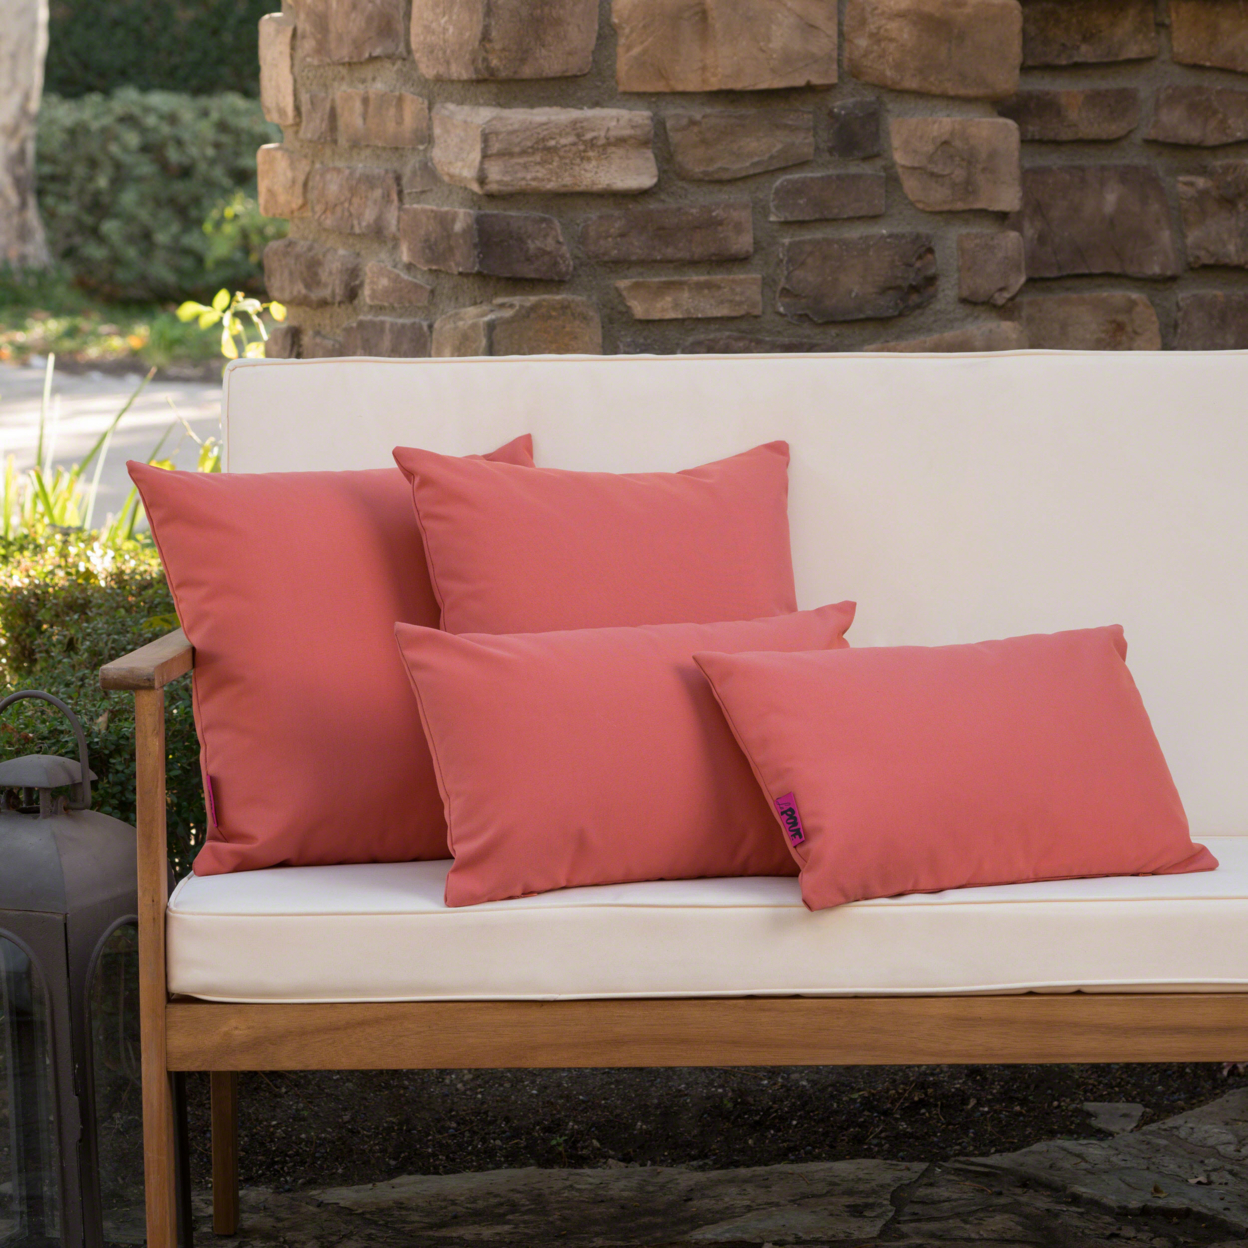 Coronado Outdoor Water Resistant Square And Rectangular Throw Pillows (Set Of 4) - Teal